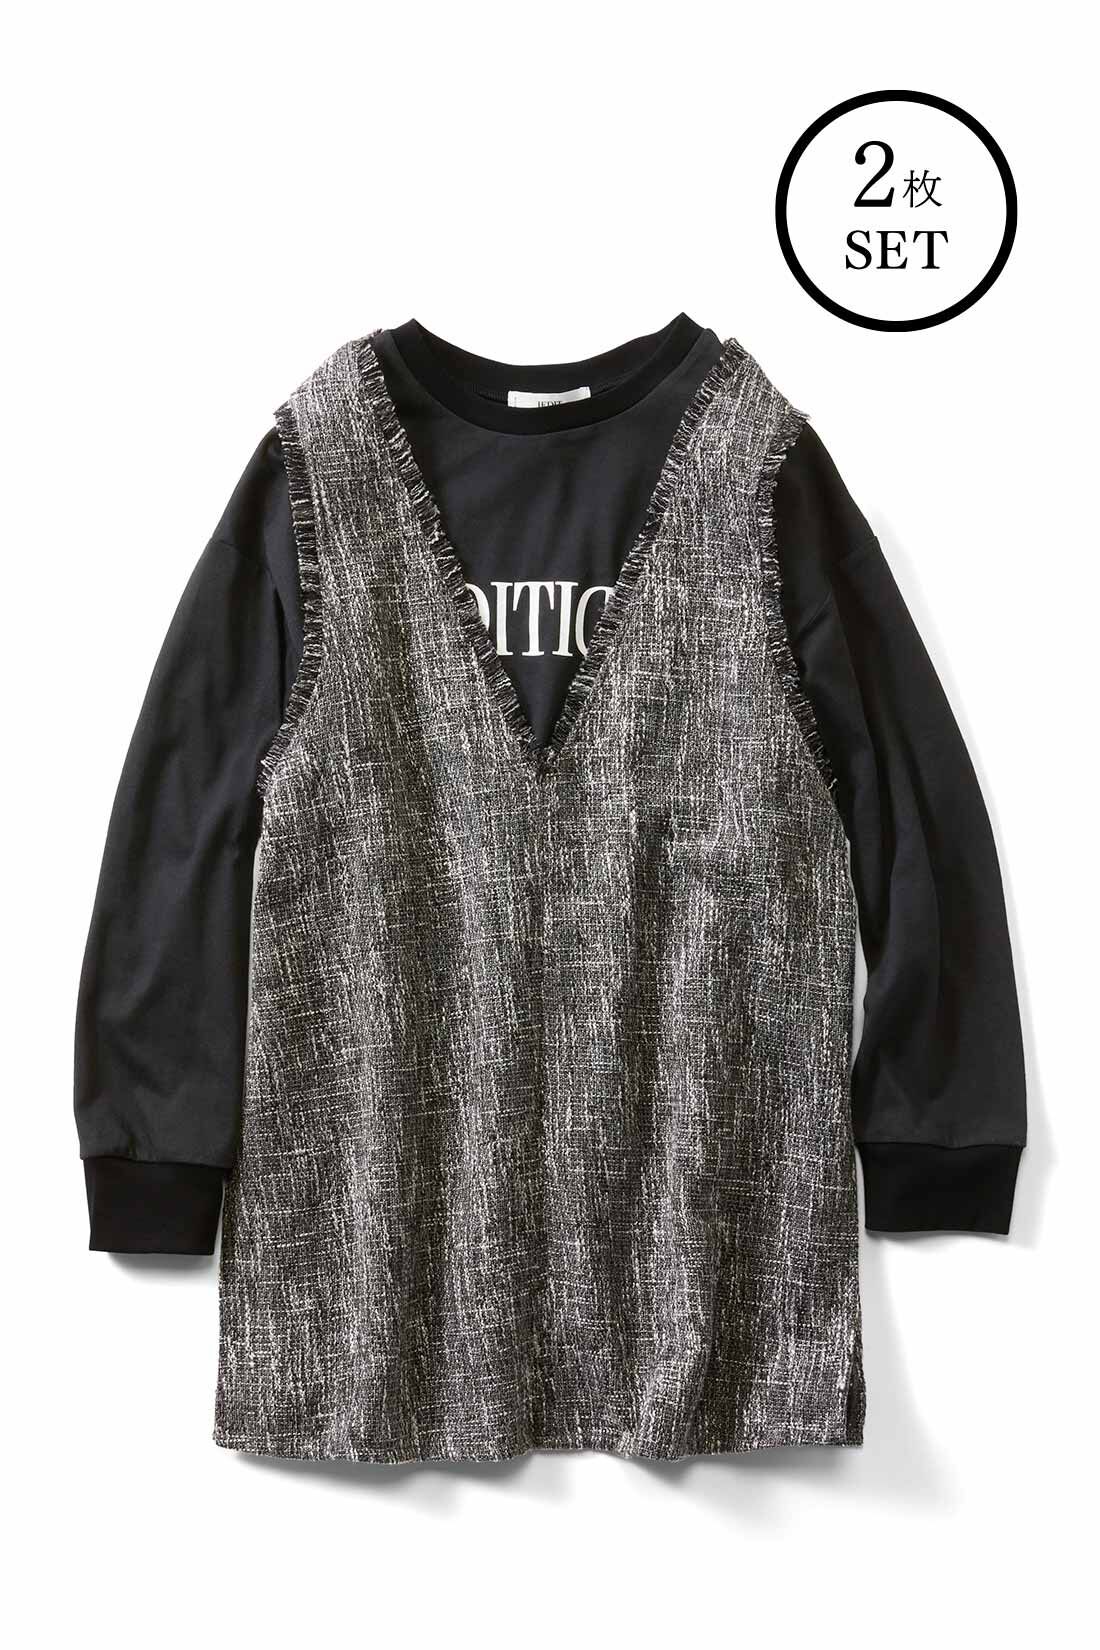 IEDIT|IEDIT[イディット]　こなれコーデがかなう ツイードベストと長袖ロゴTシャツのセット〈ブラック〉|〈ブラック〉